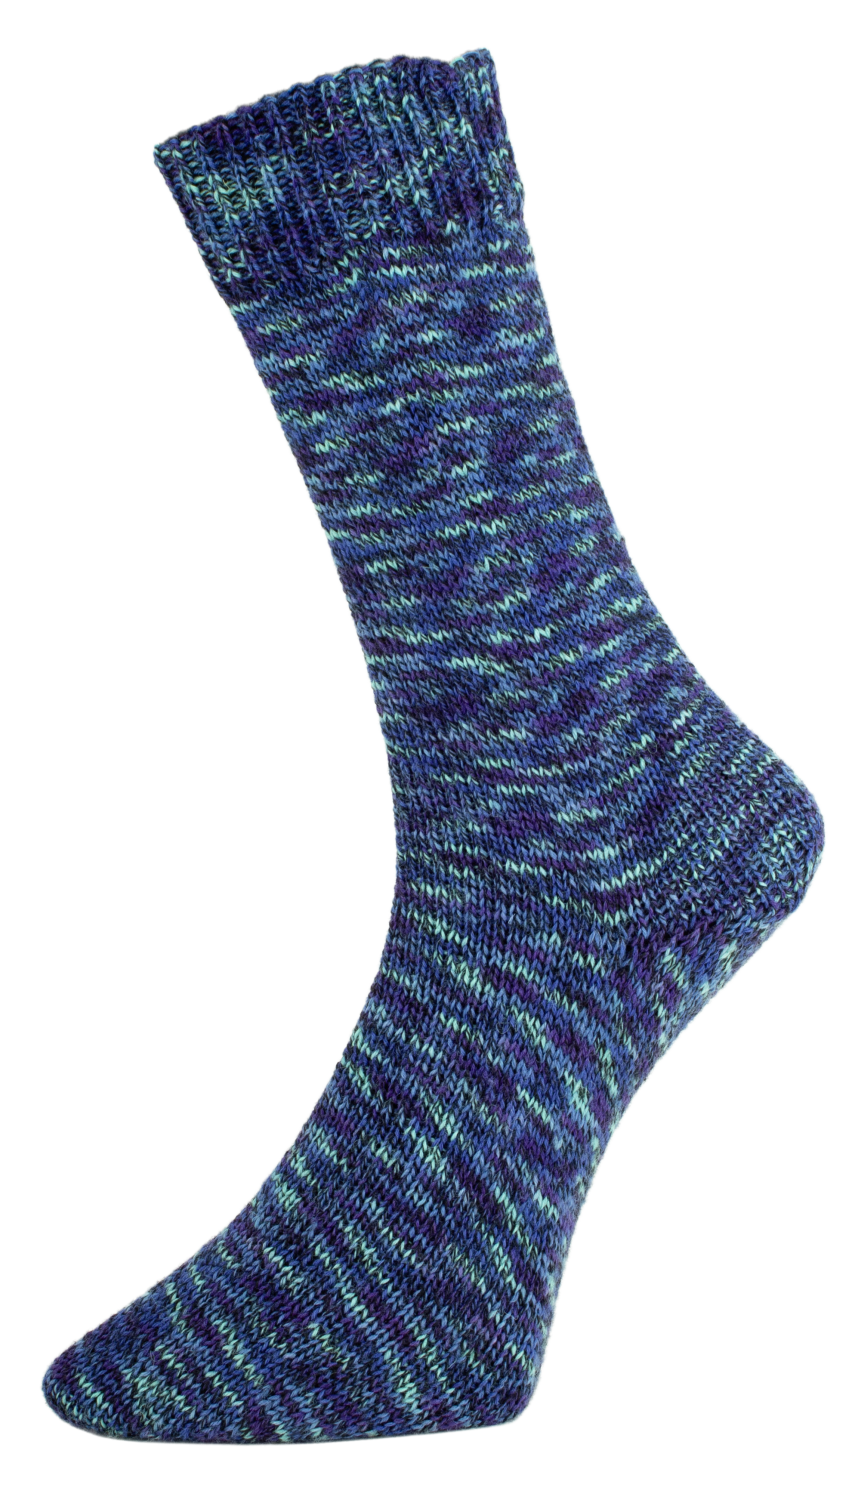 Pro Lana Golden Socks TITLIS - 100g Sockenwolle Farbe: 585